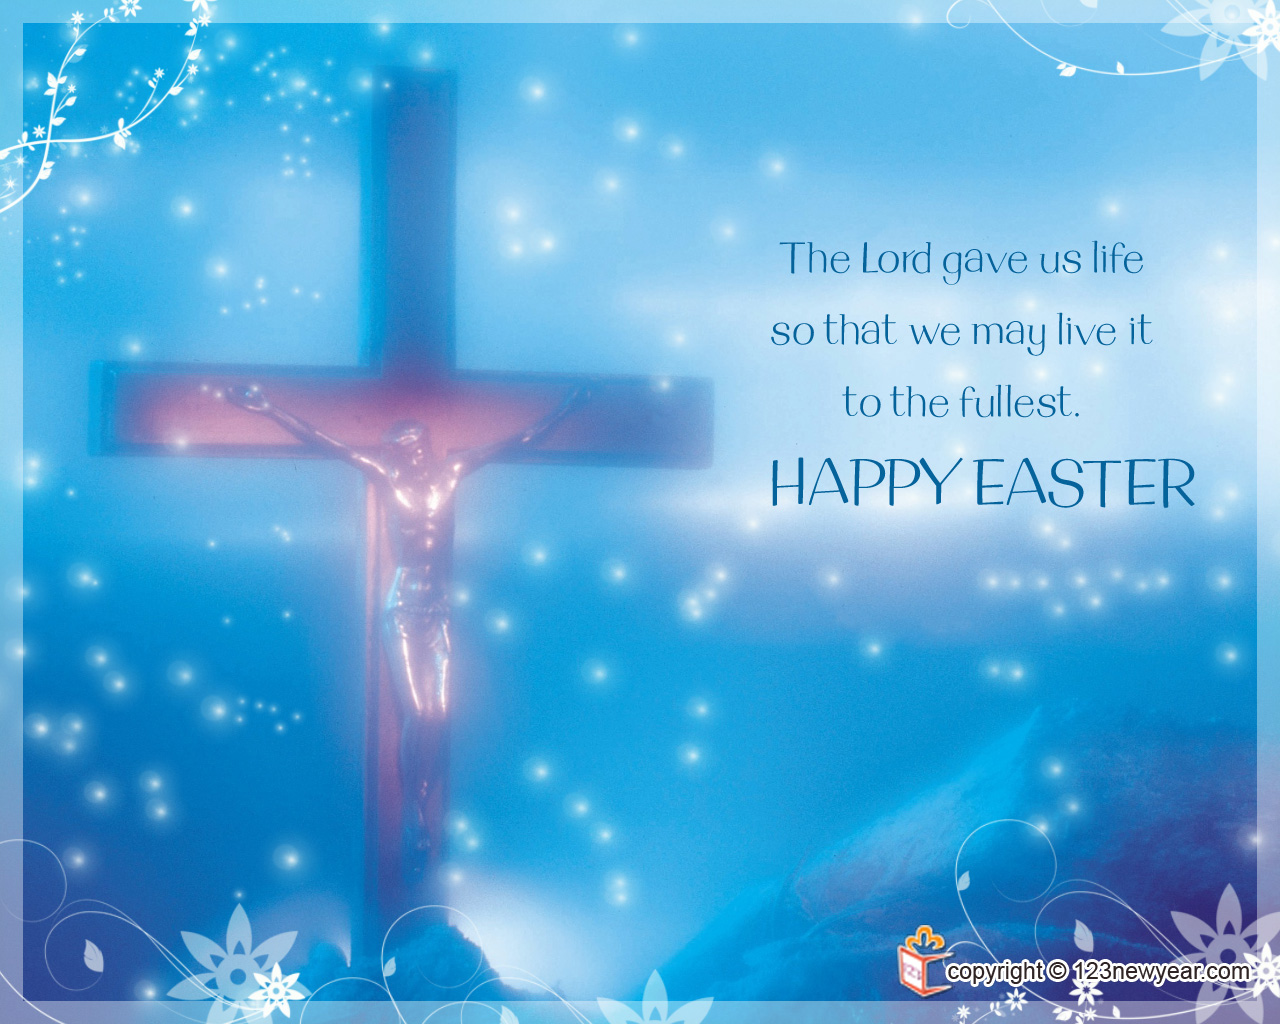 Religious Easter Wallpaper Images  Free Download on Freepik